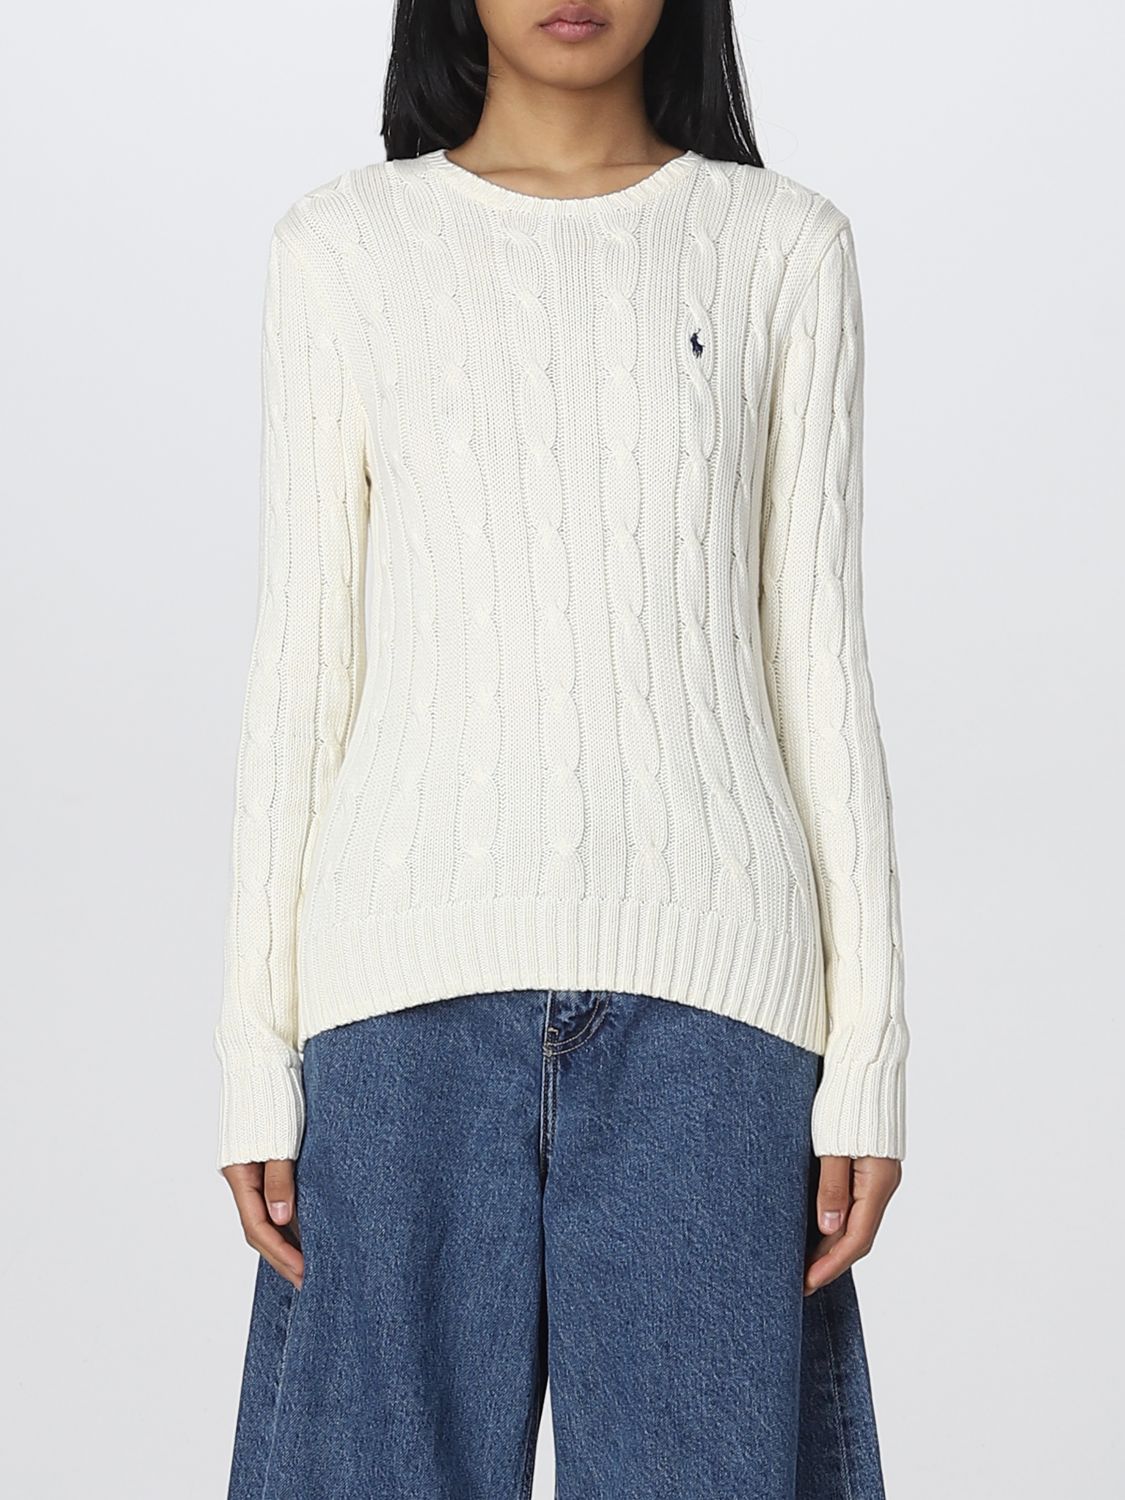 POLO RALPH LAUREN: sweater for woman - Cream | Polo Ralph Lauren sweater  211891640 online on 